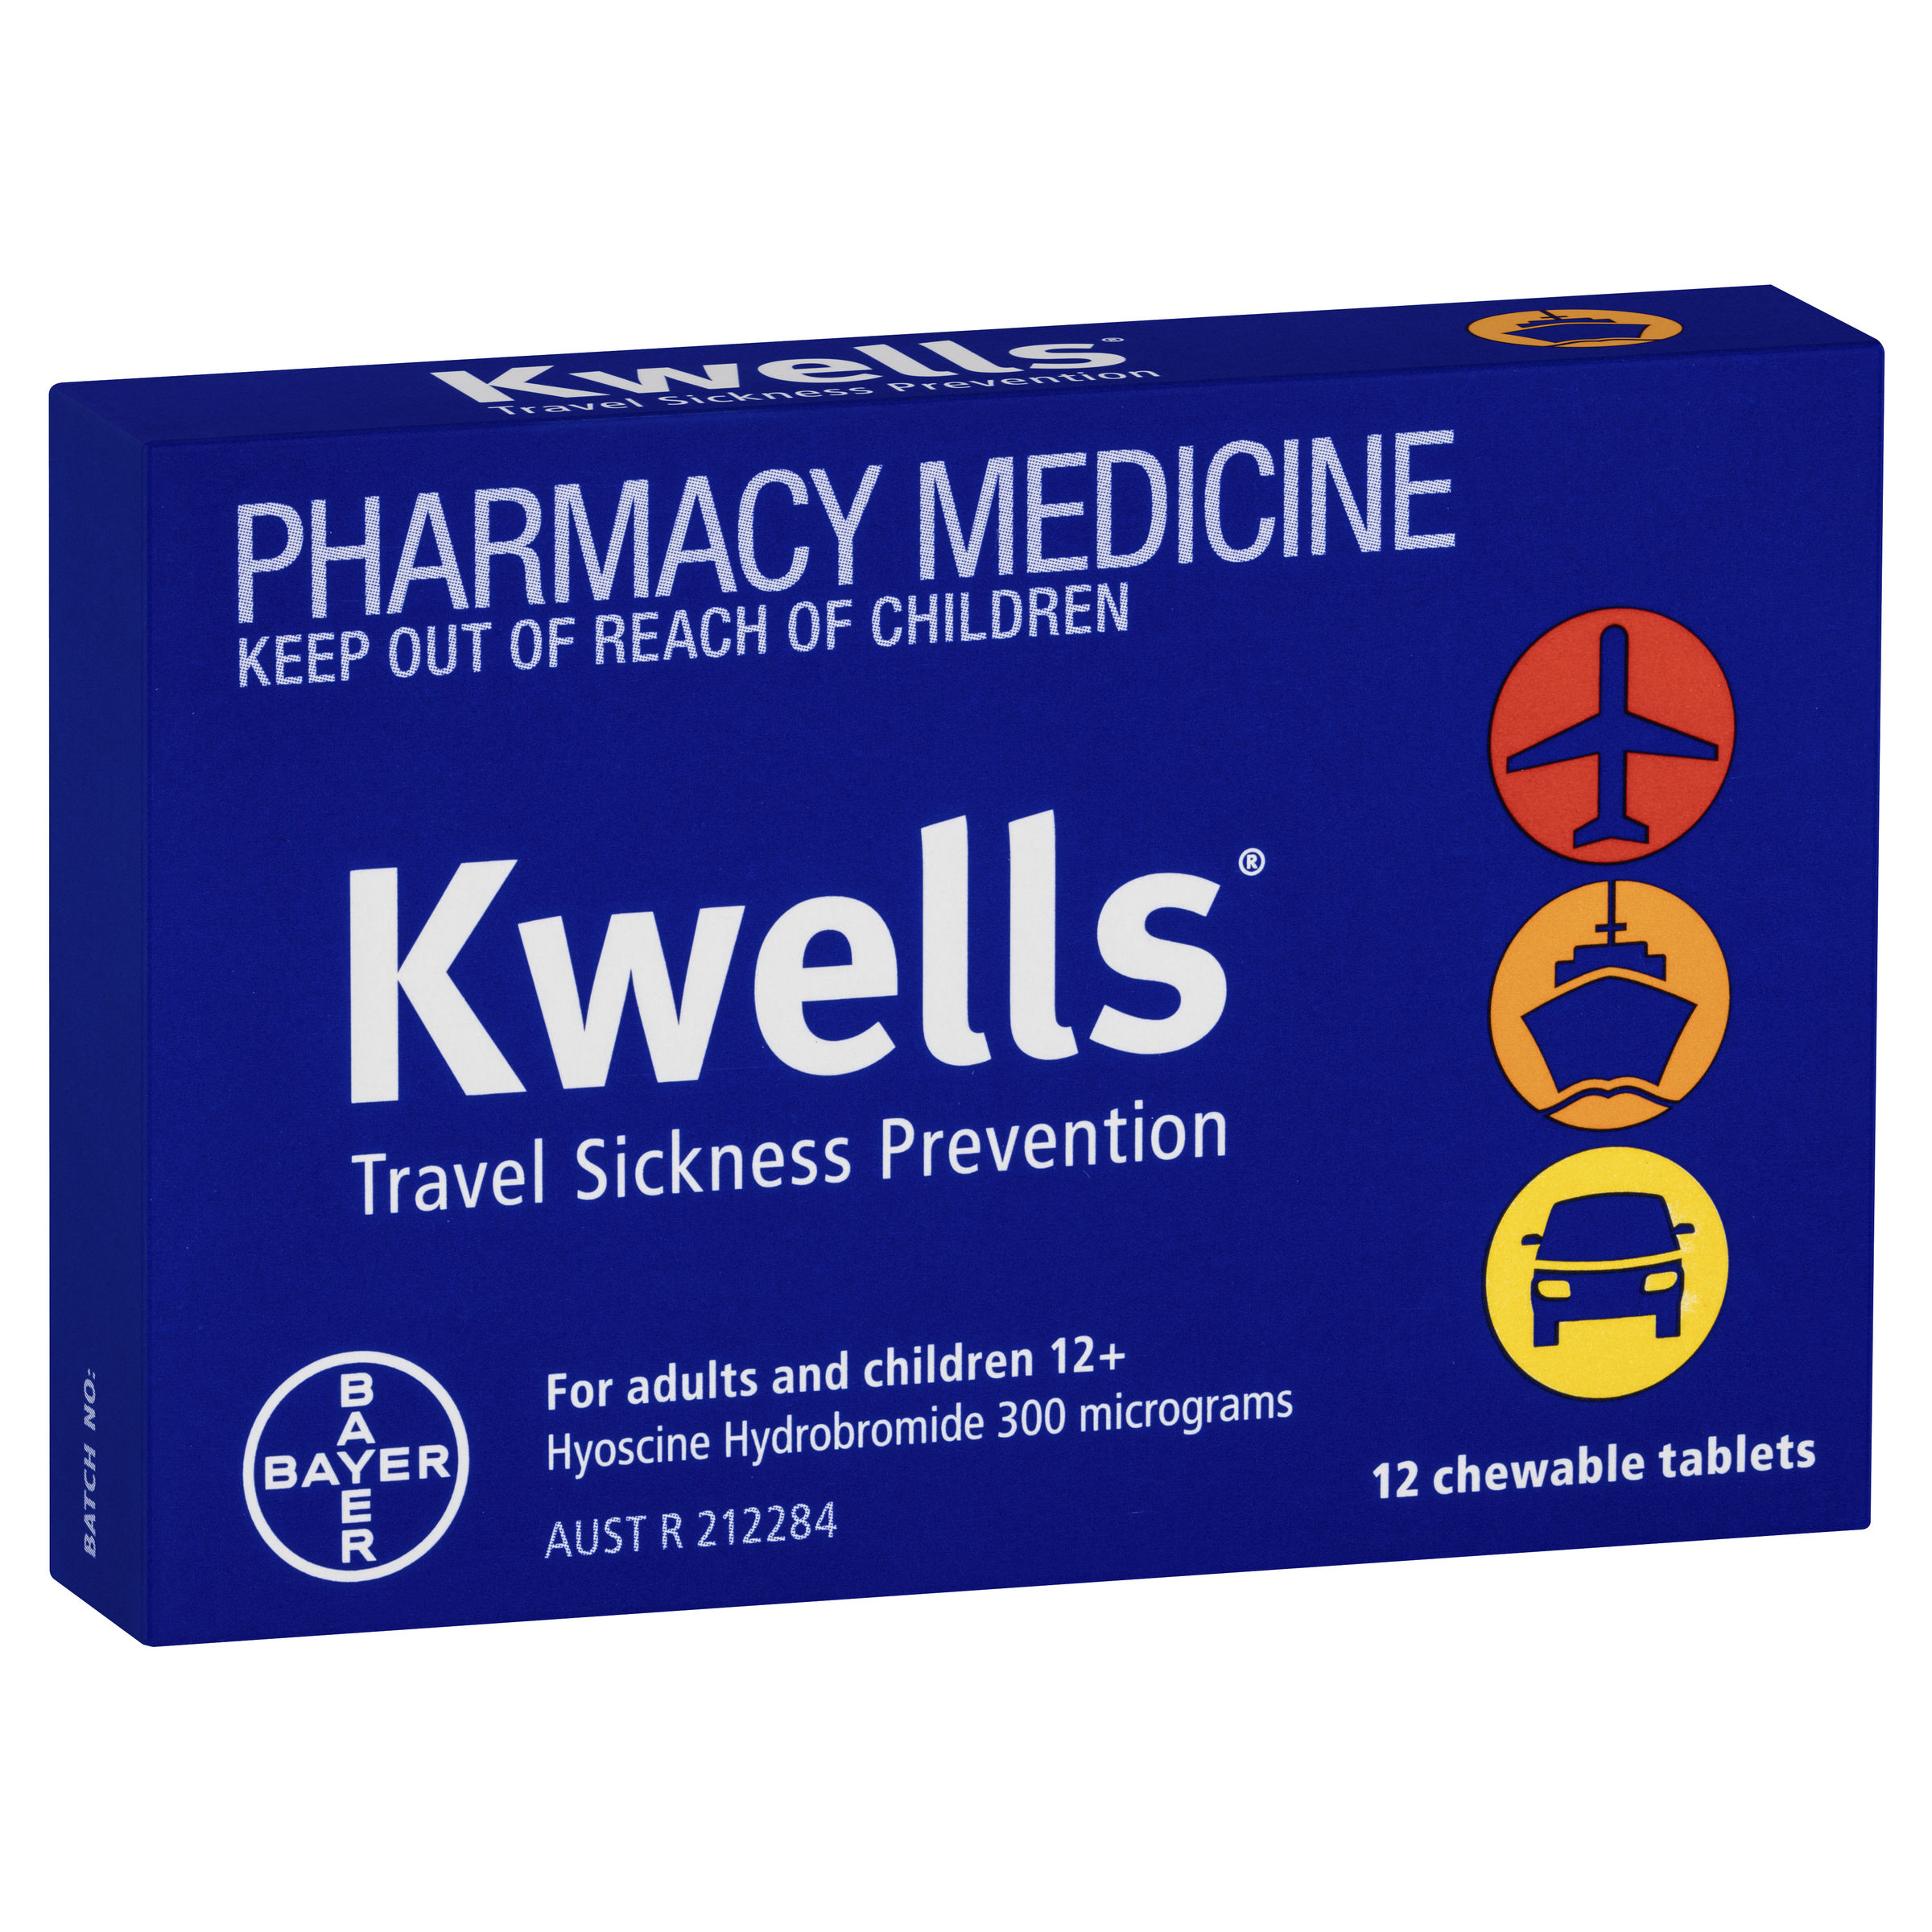 travel sickness medication australia